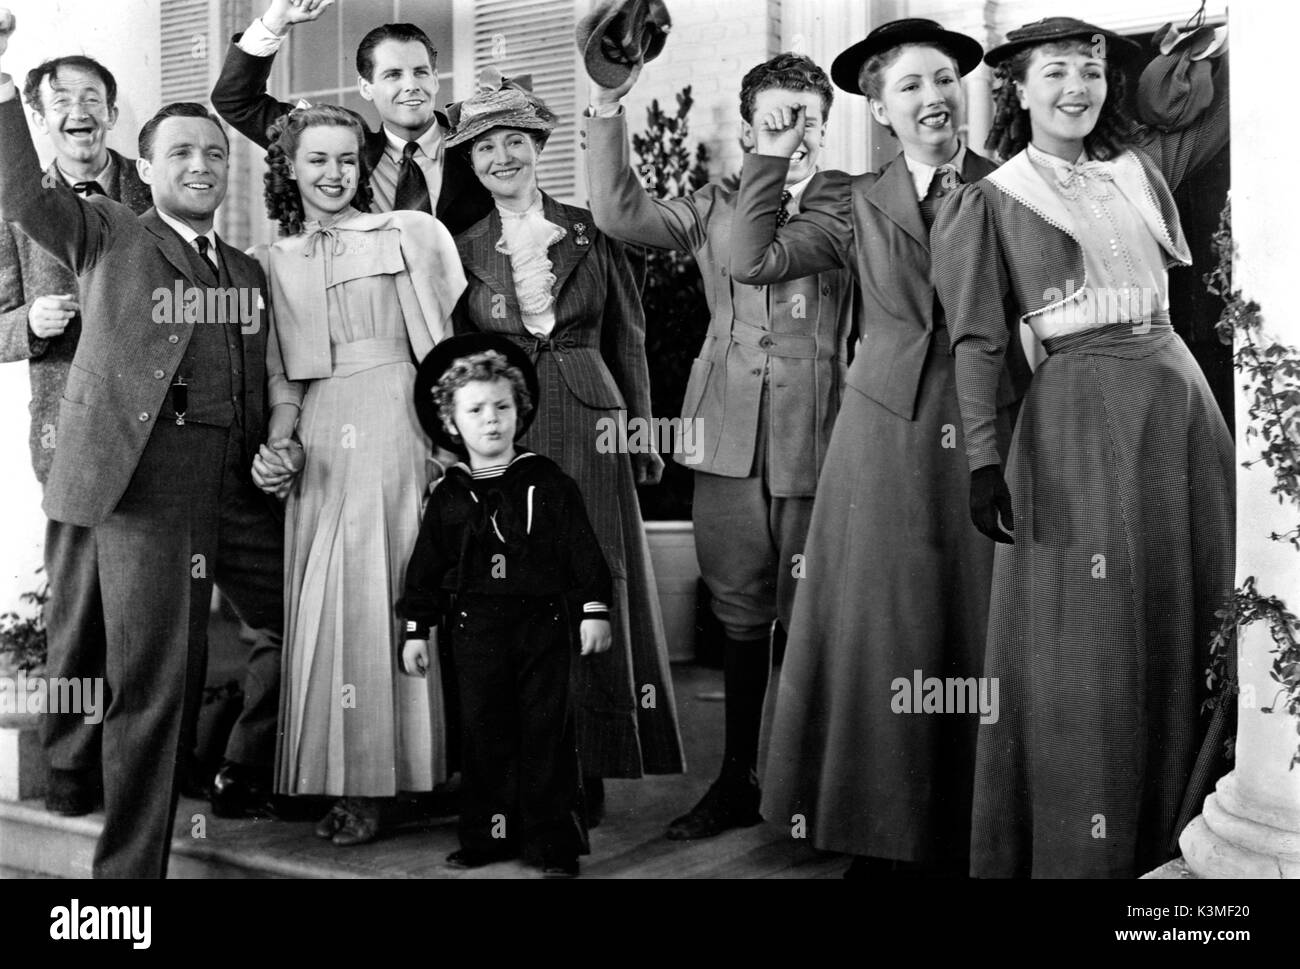 MOTHER CAREY'S CHICKENS [US 1938] [L-R] WALTER BRENNAN, FRANK ALBERTSON, ANNE SHIRLEY, JAMES ELLISON, FAY BAINTER, JACKIE MORAN, PHYLLIS KENNEDY, RUBY KEELER, DONNIE DUNAGAN [child actor]     Date: 1938 Stock Photo